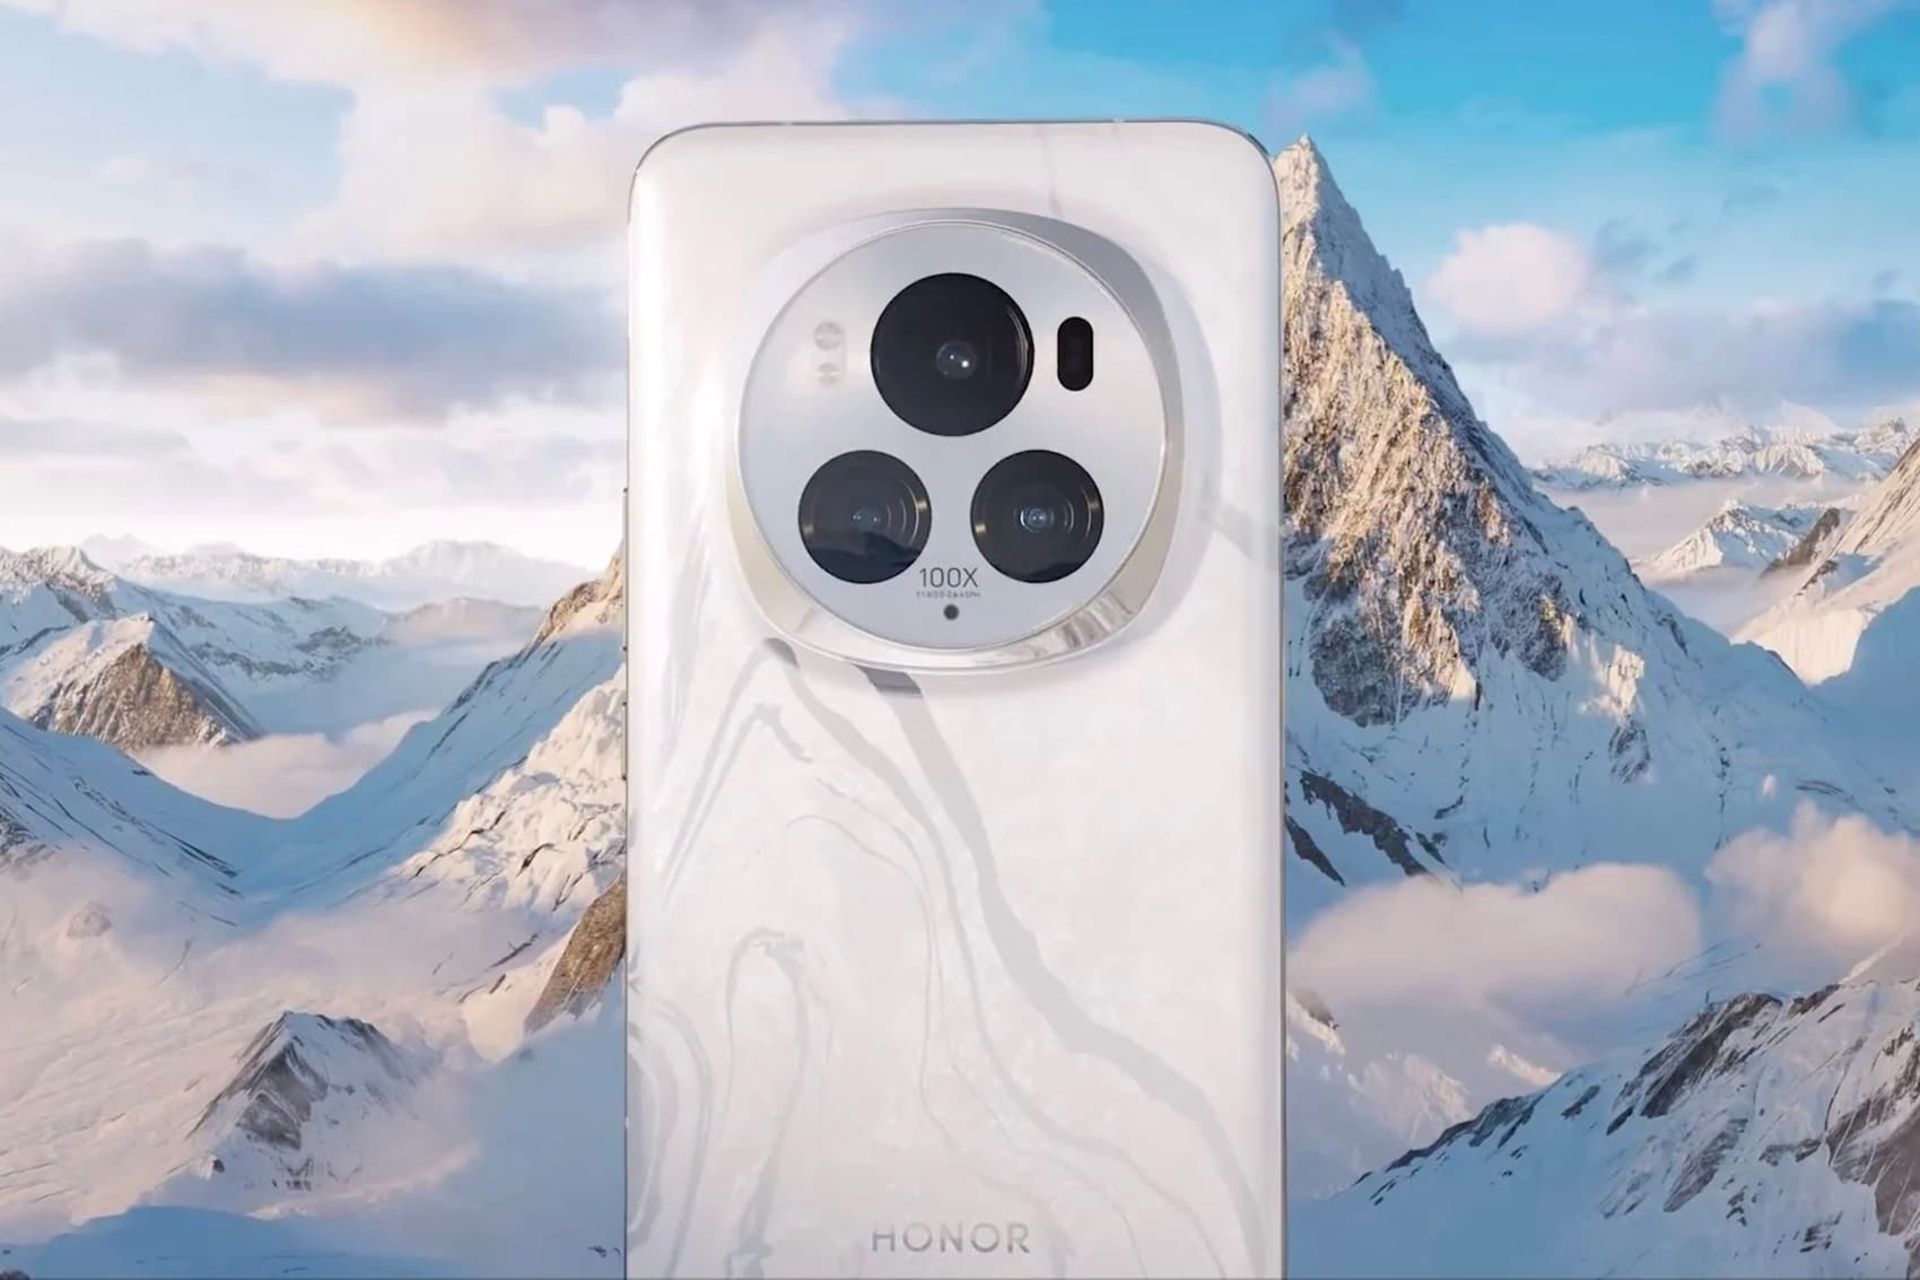 مدل سفید آنر مجیک ۶ پرو / Honor Magic 6 Pro پس زمینه کوه برفی